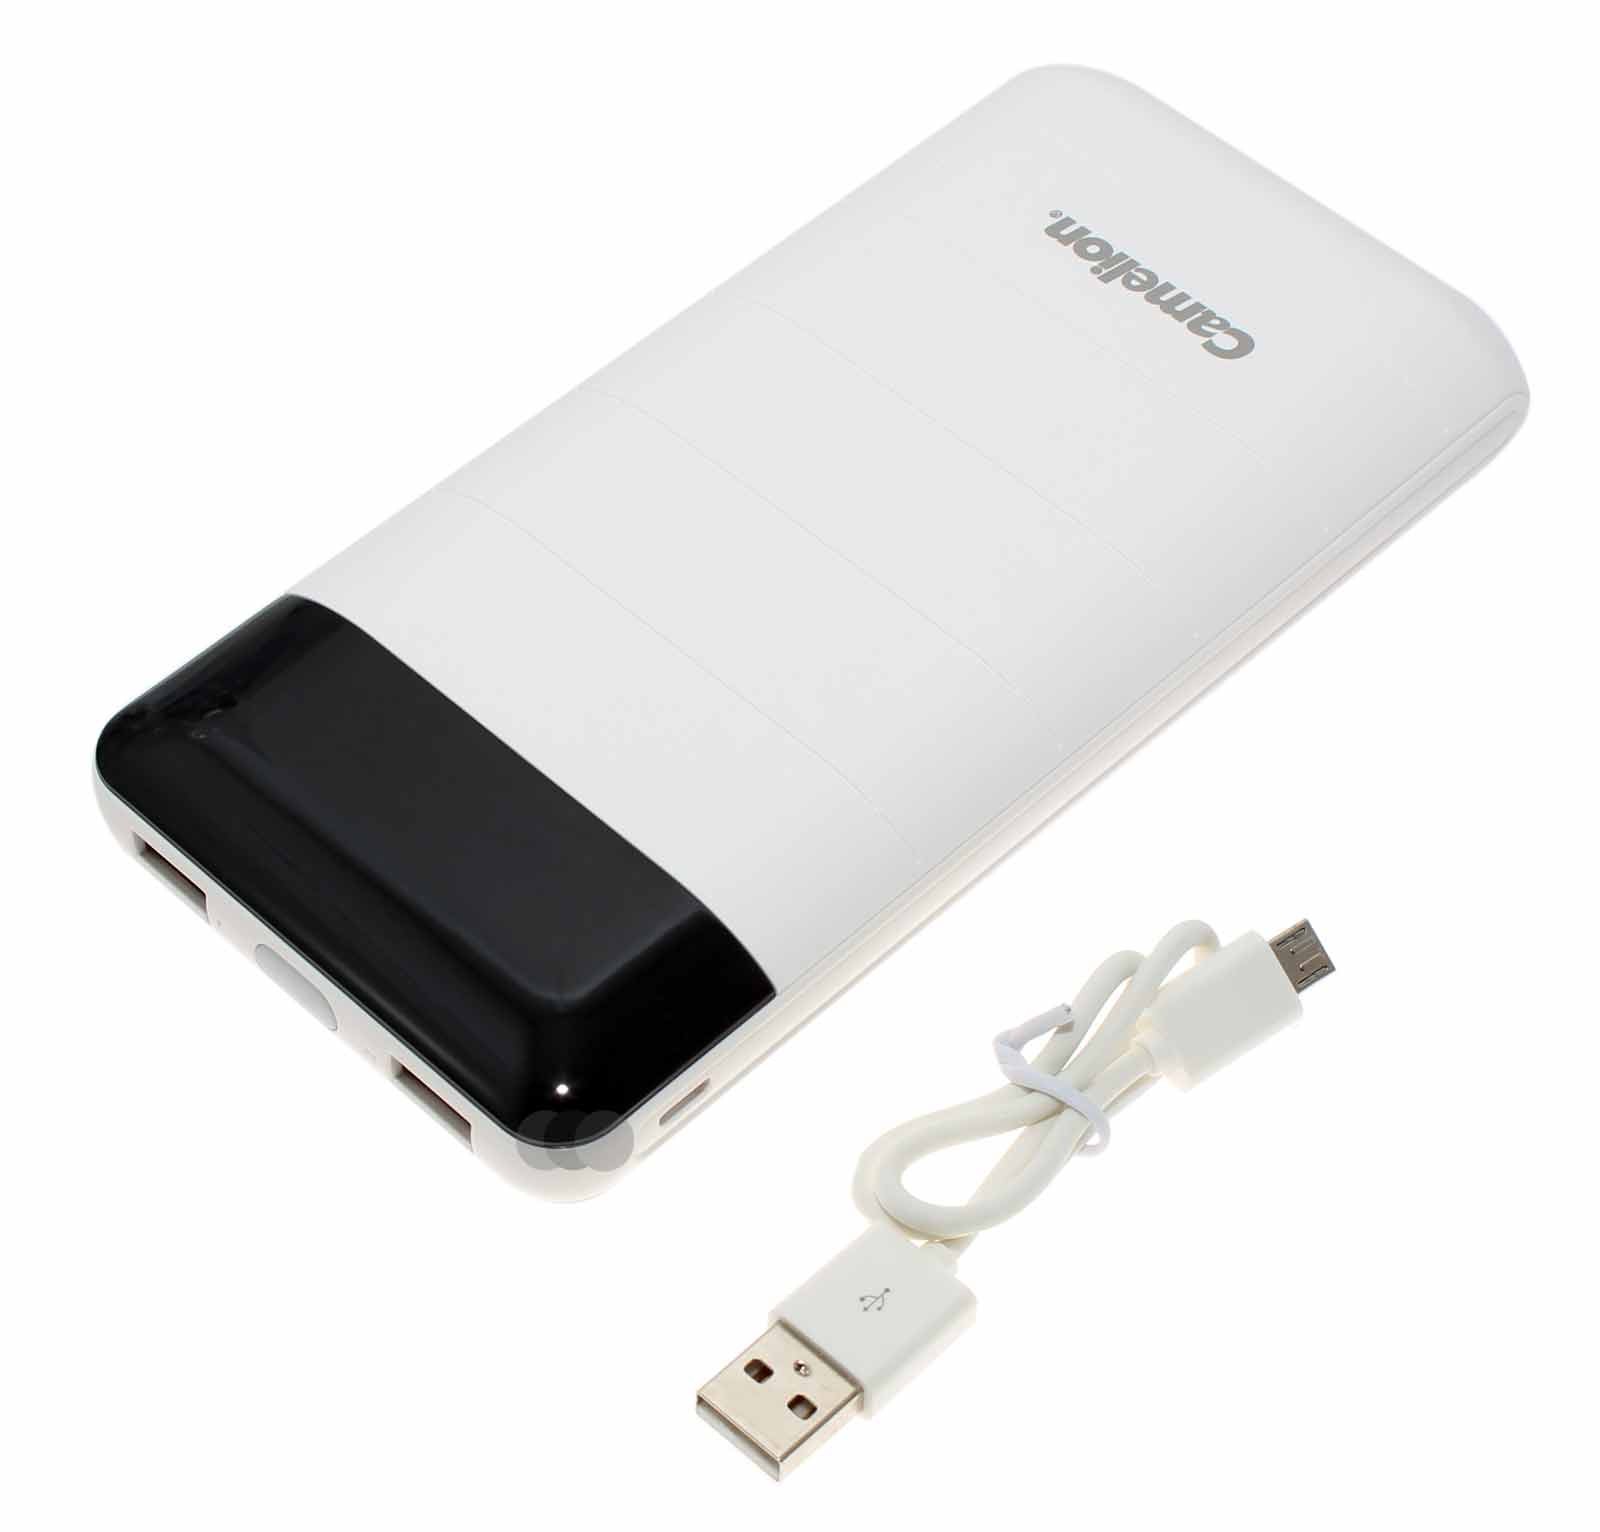 Camelion PS679 Powerbank externer Akku mit Taschenlampenfunktion, 2x USB + Micro-USB, 16000mAh